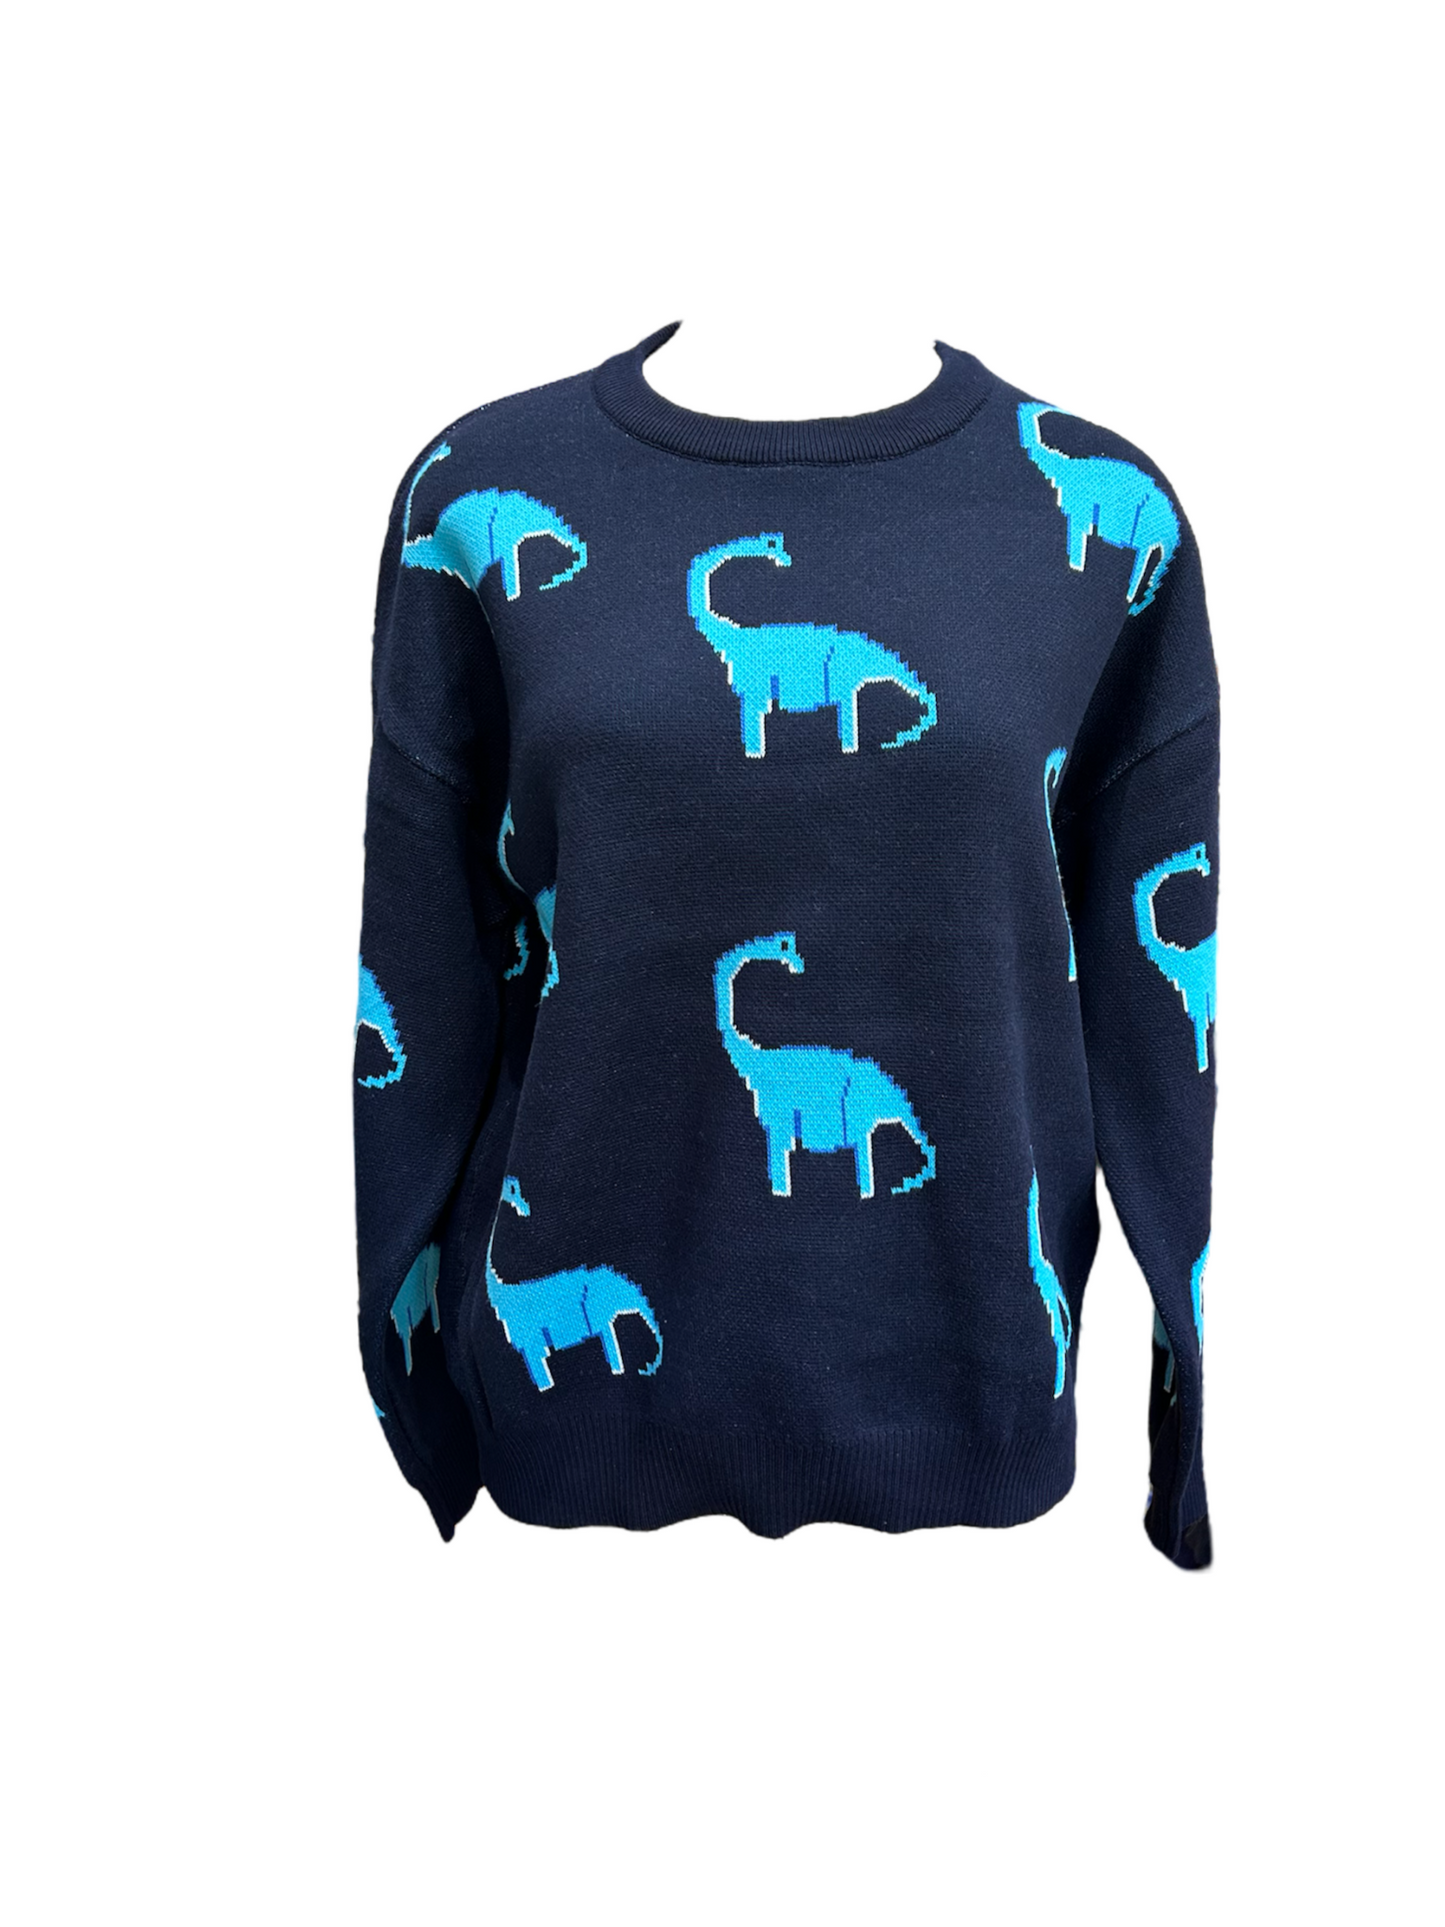 Prehistoric-themed Knit Pullover